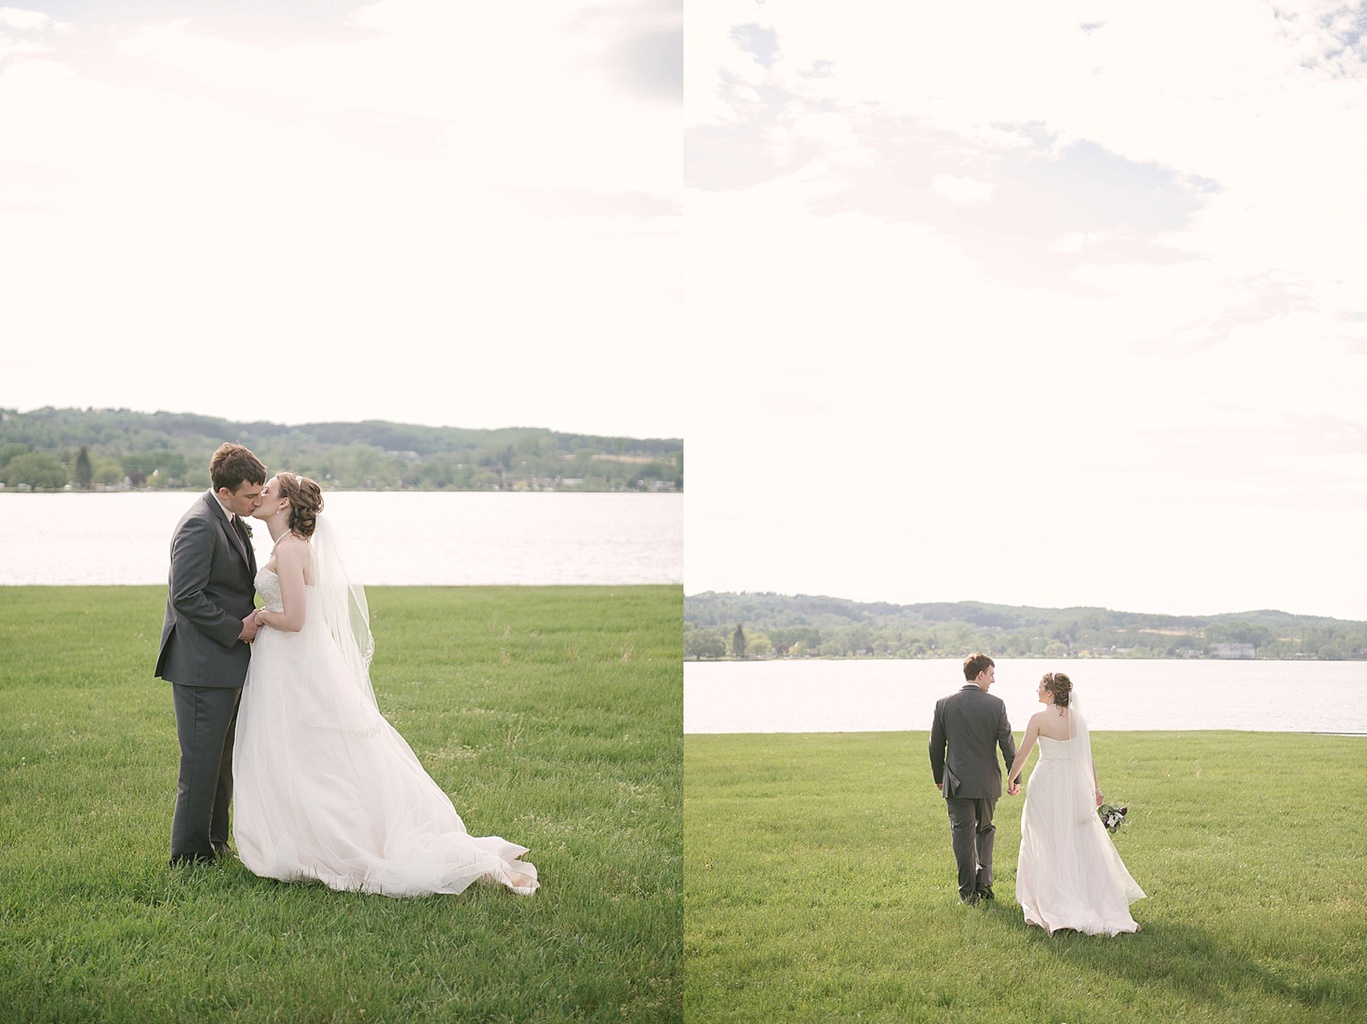 Clinch Park wedding photos overlooking the Grand Traverse Bay, Traverse City, Michigan